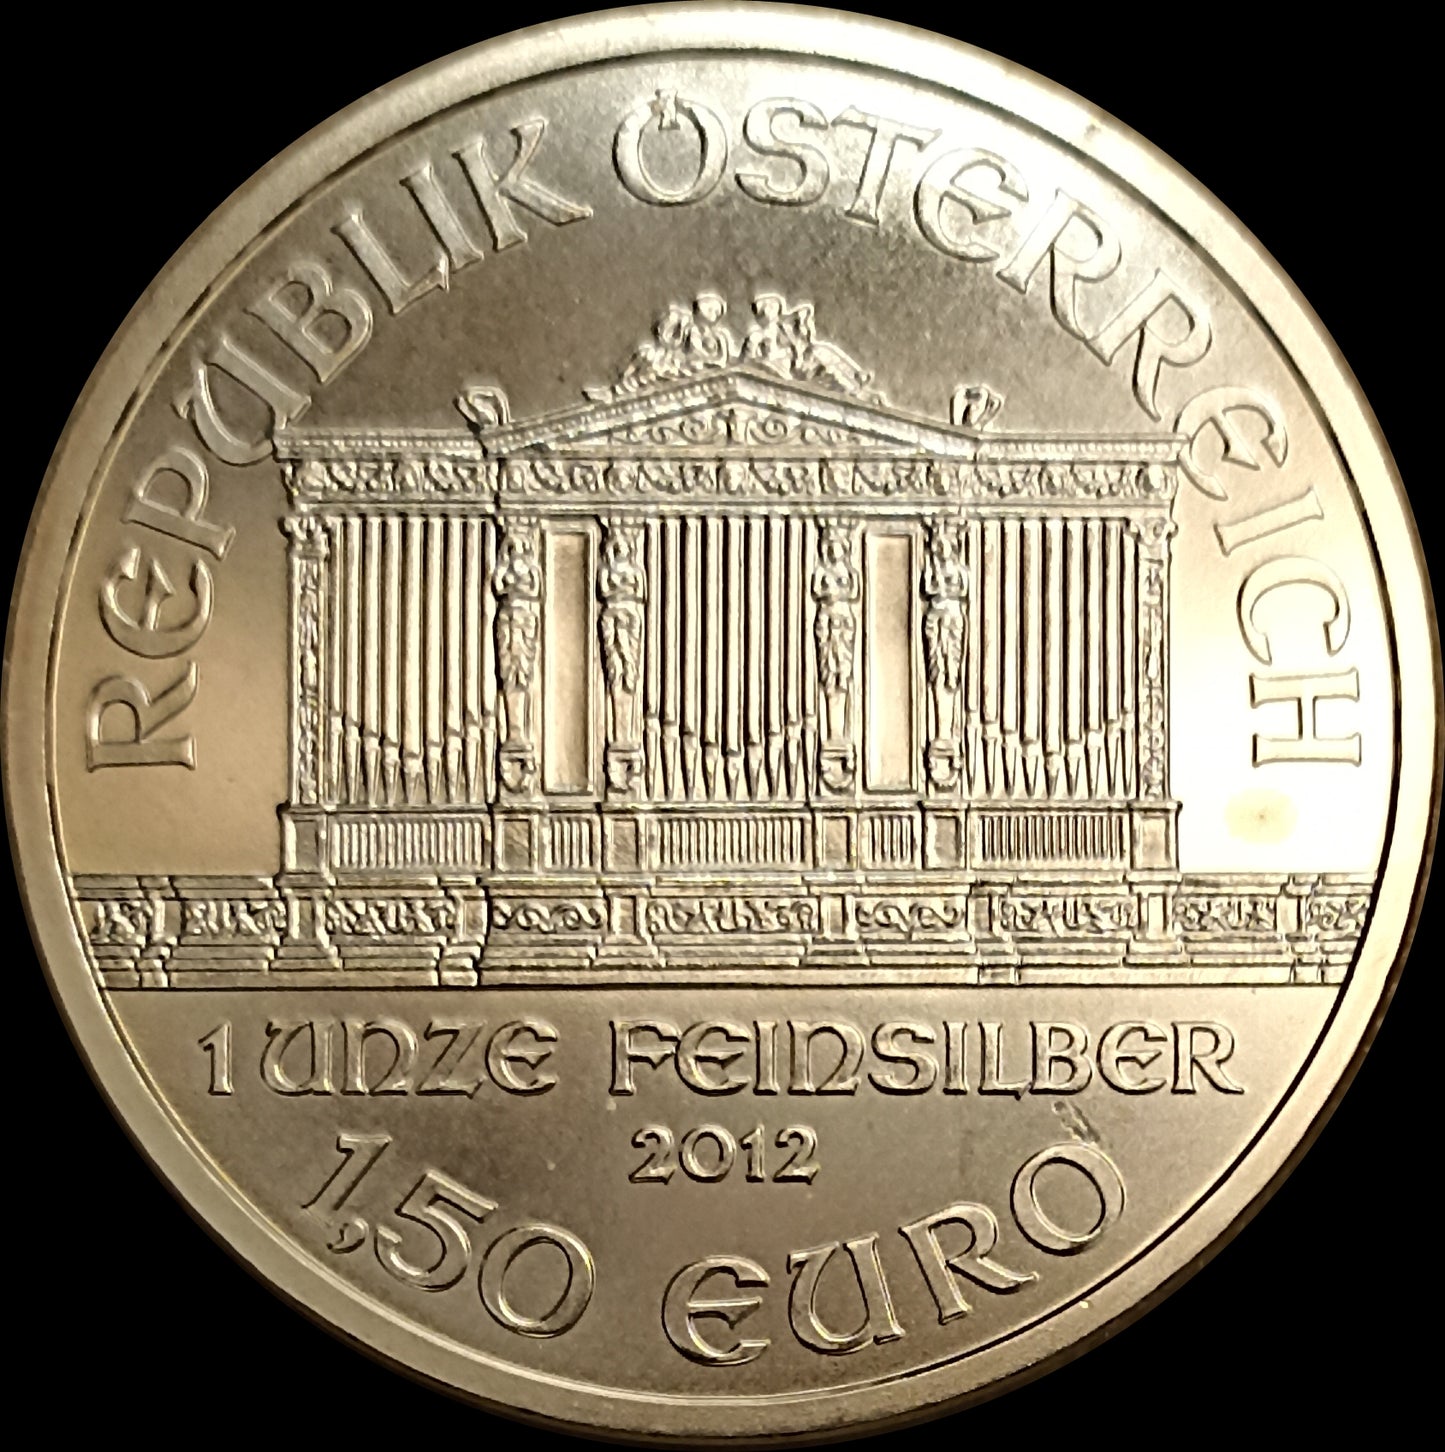 VIENNA PHILHARMONIKER, 1 oz silver €1.5, 2012